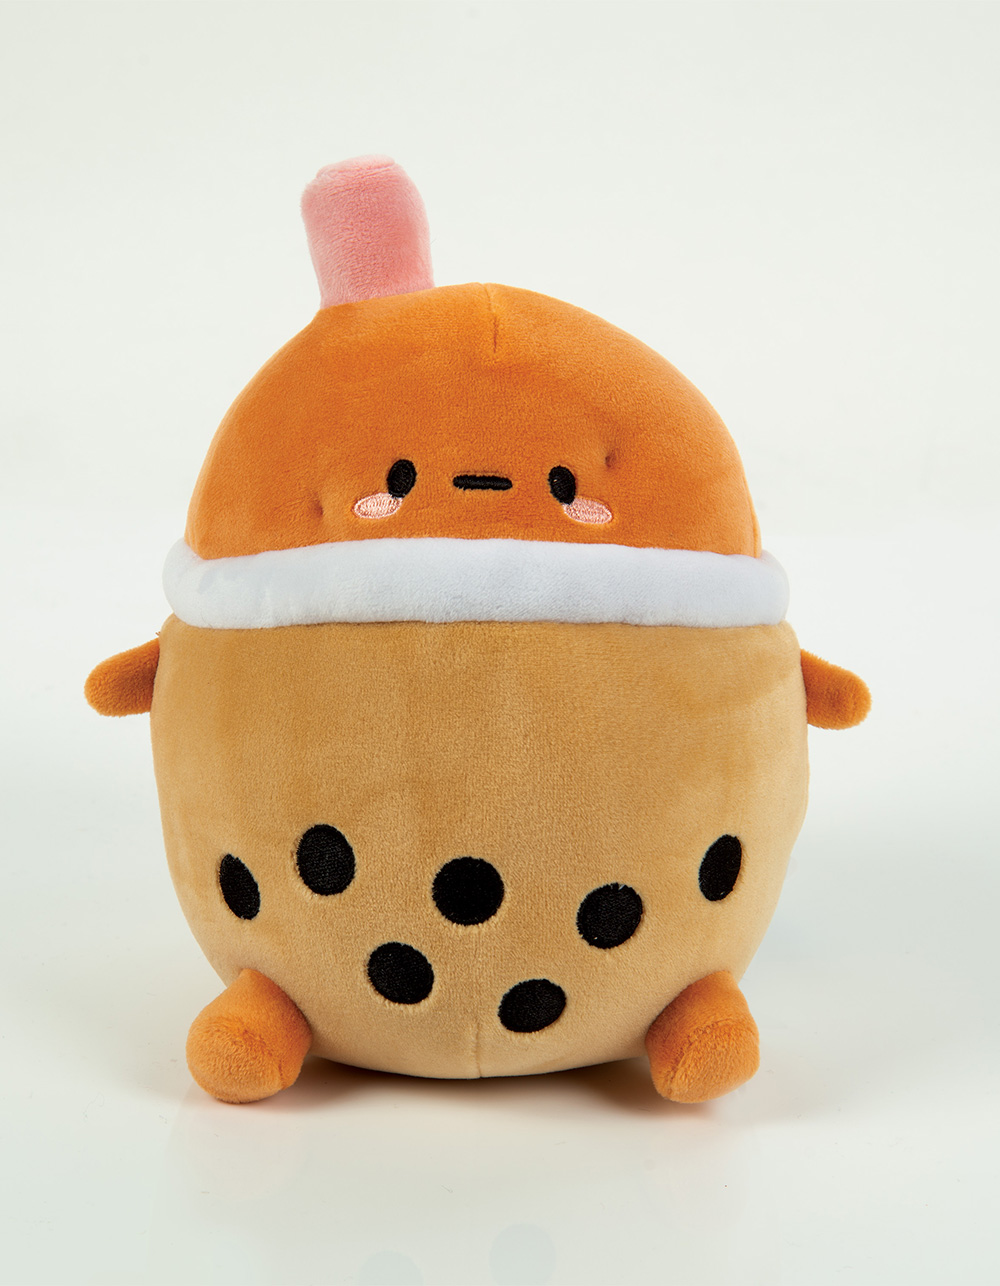 SMOKO Boba Tayto Potato 7'' Mochi Plush Toy